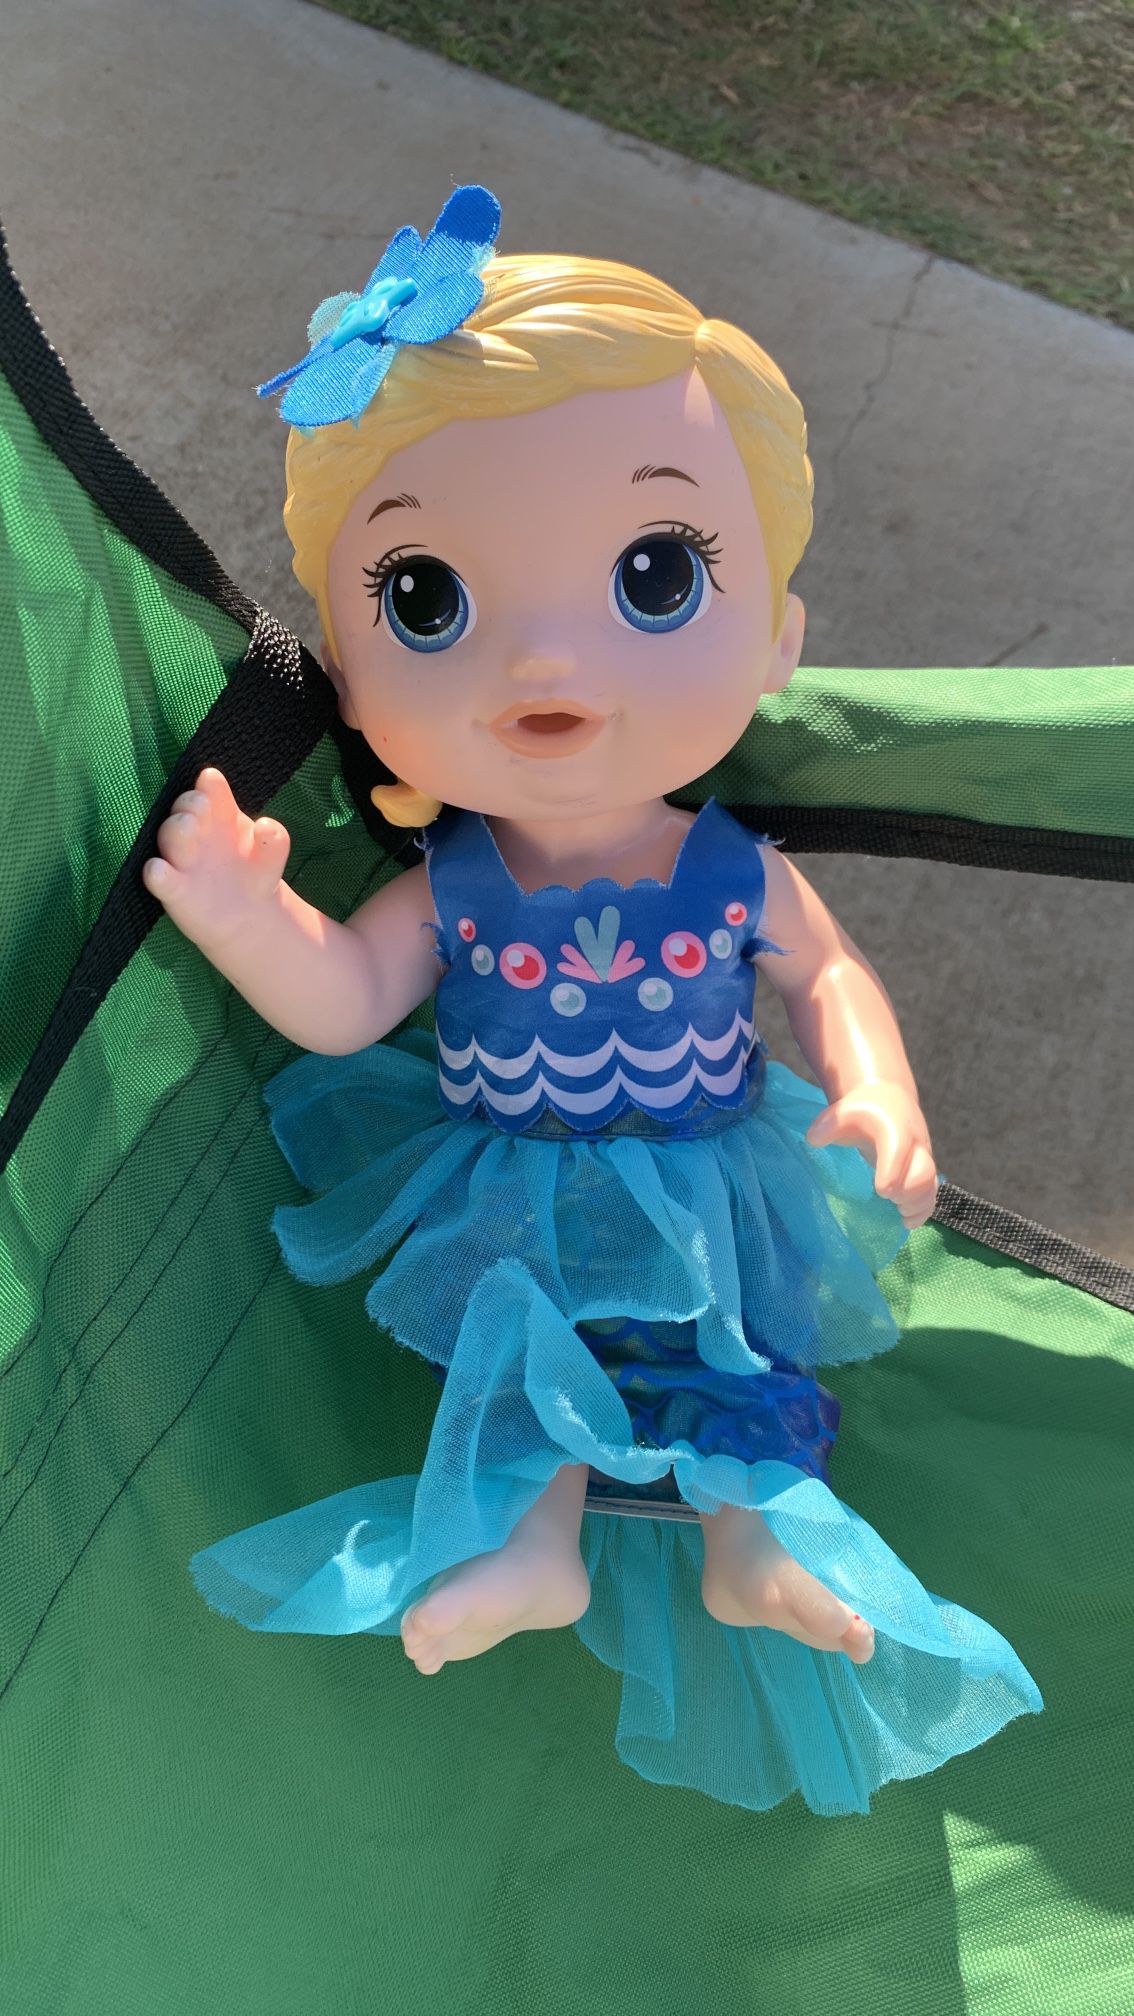 Bath Doll Mermaid For Toddlers $5 